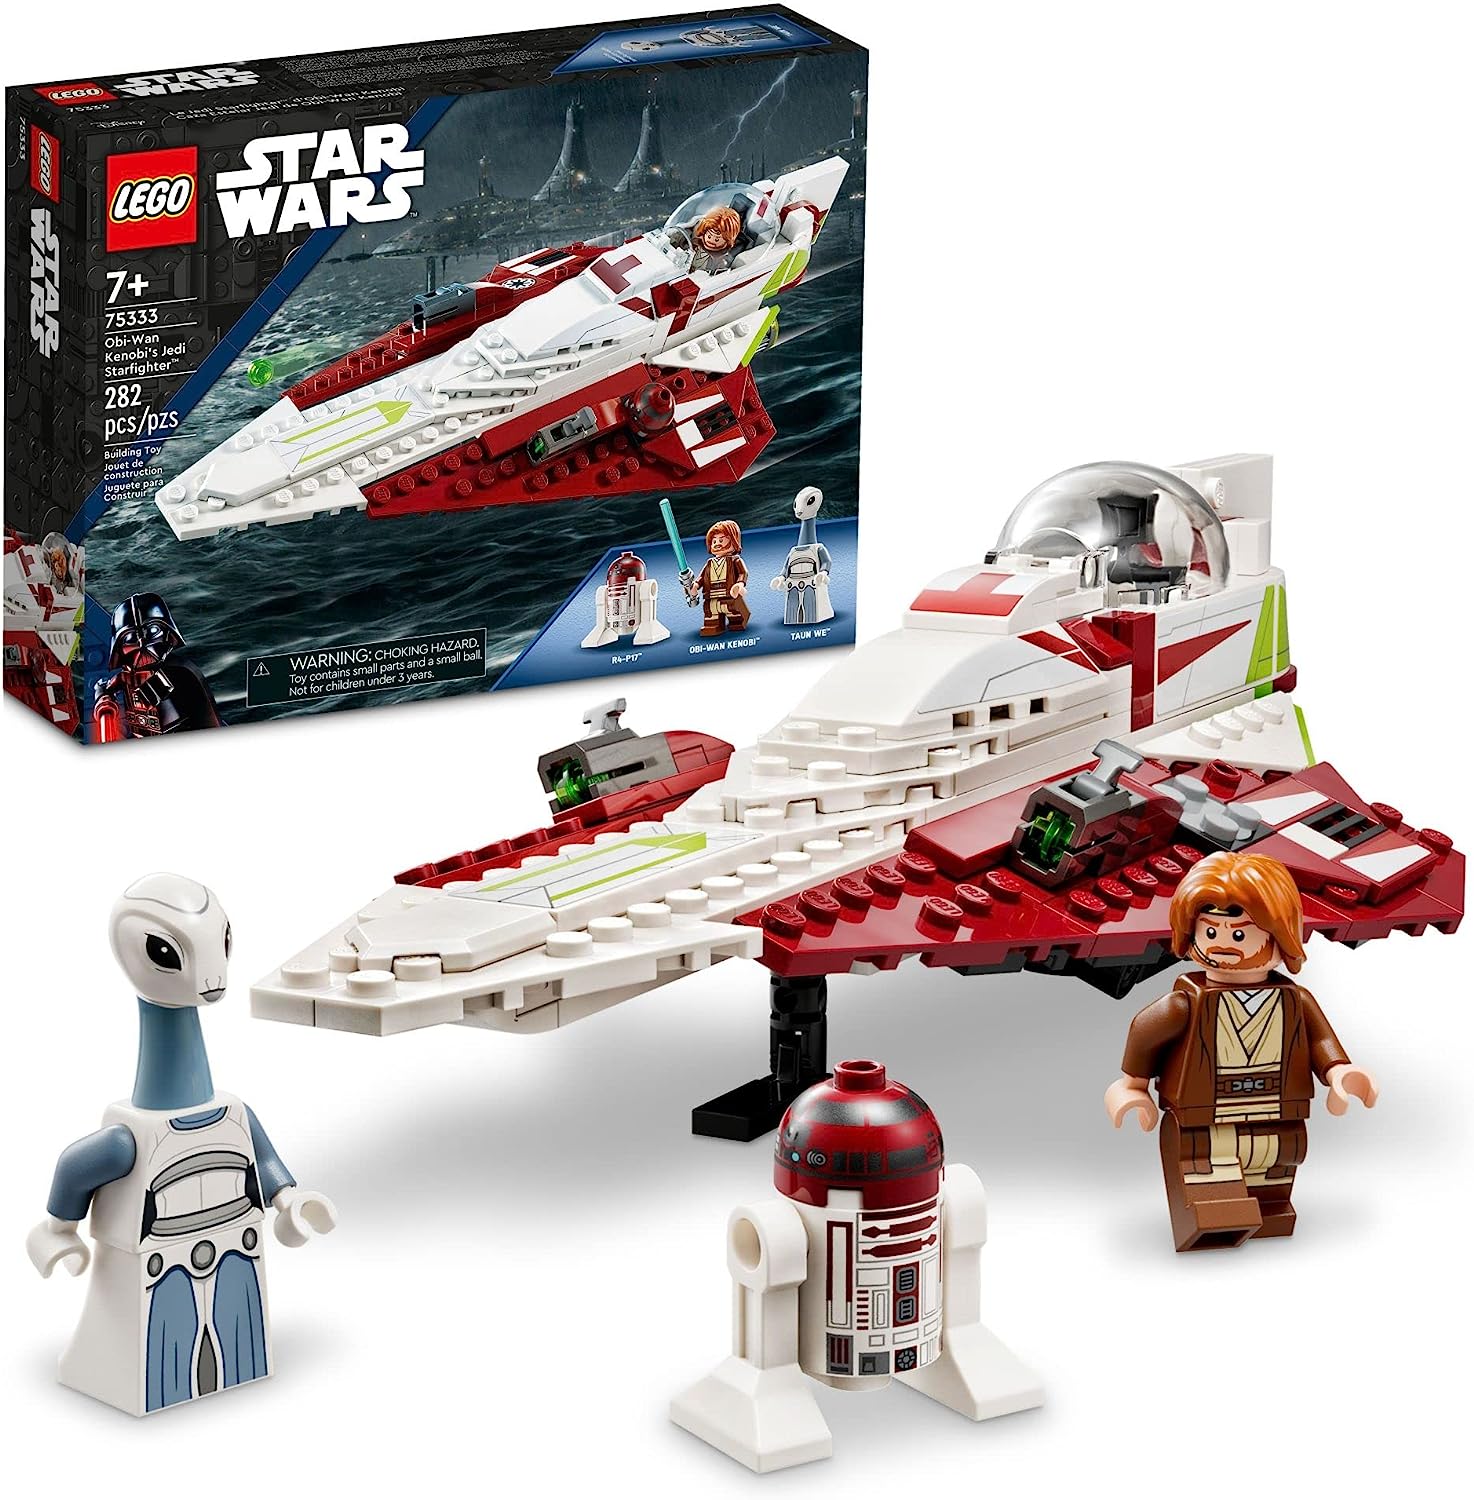 Đồ chơi Lego Phi Thuyền LEGO Star Wars OBI-Wan Kenobis Jedi Starfighter 75333 Building Toy Set - Features Minifigures